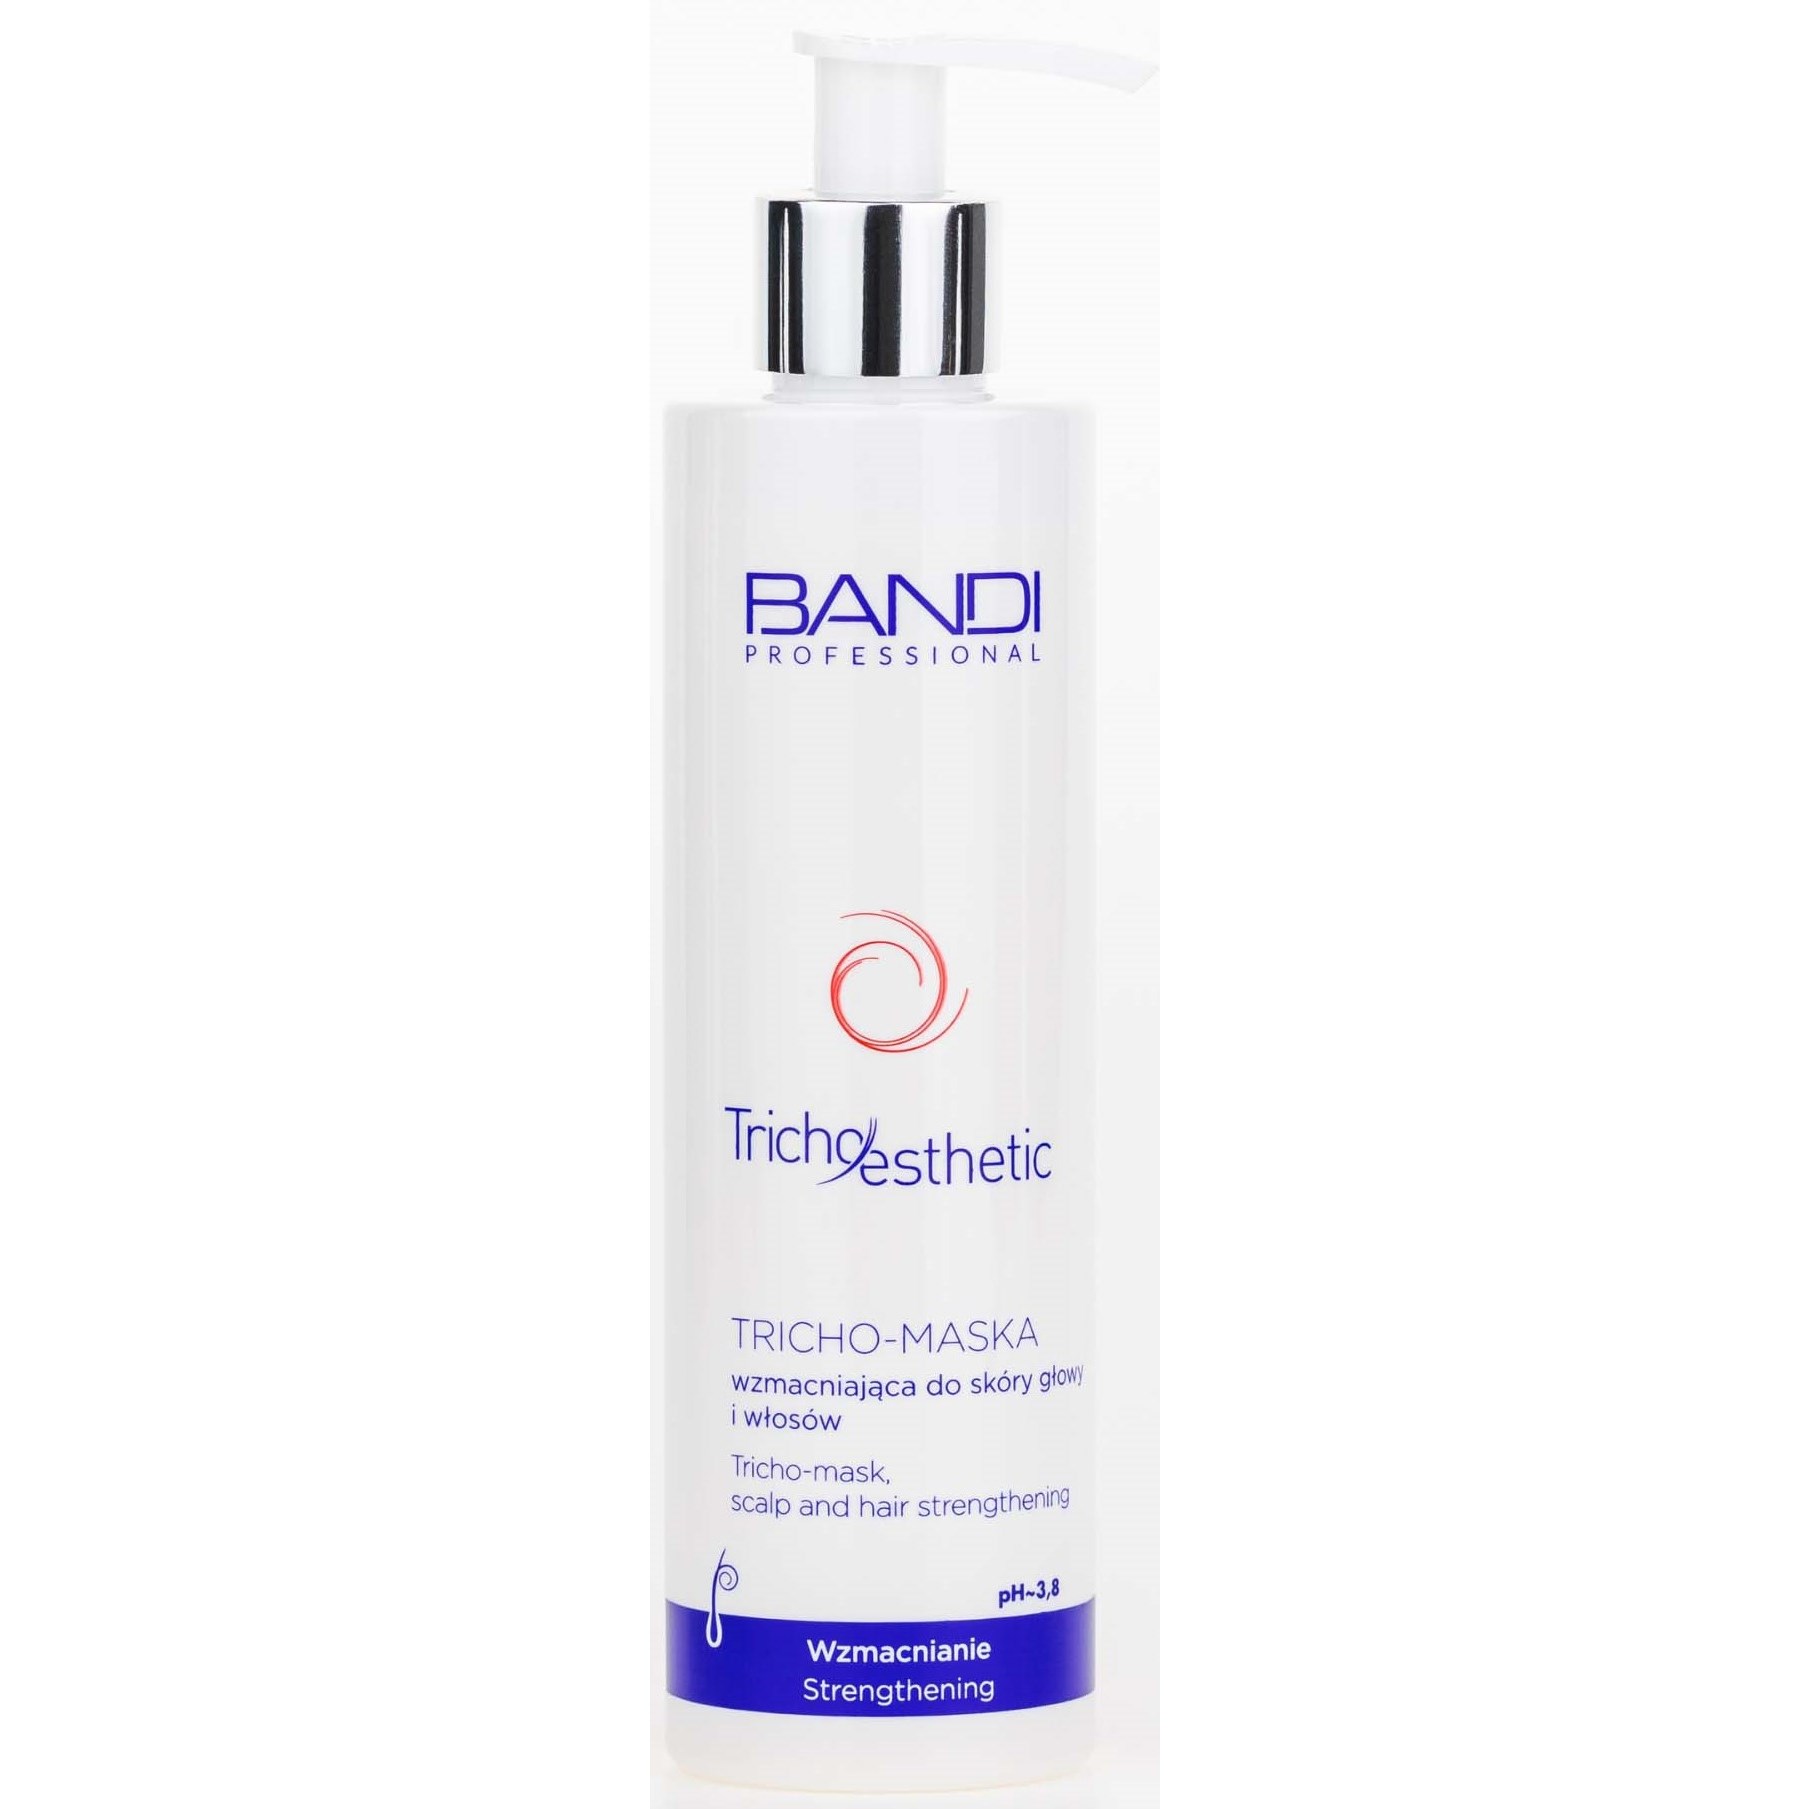 Bandi Tricho-esthetic Tricho-mask scalp and hair strengthening 230 ml